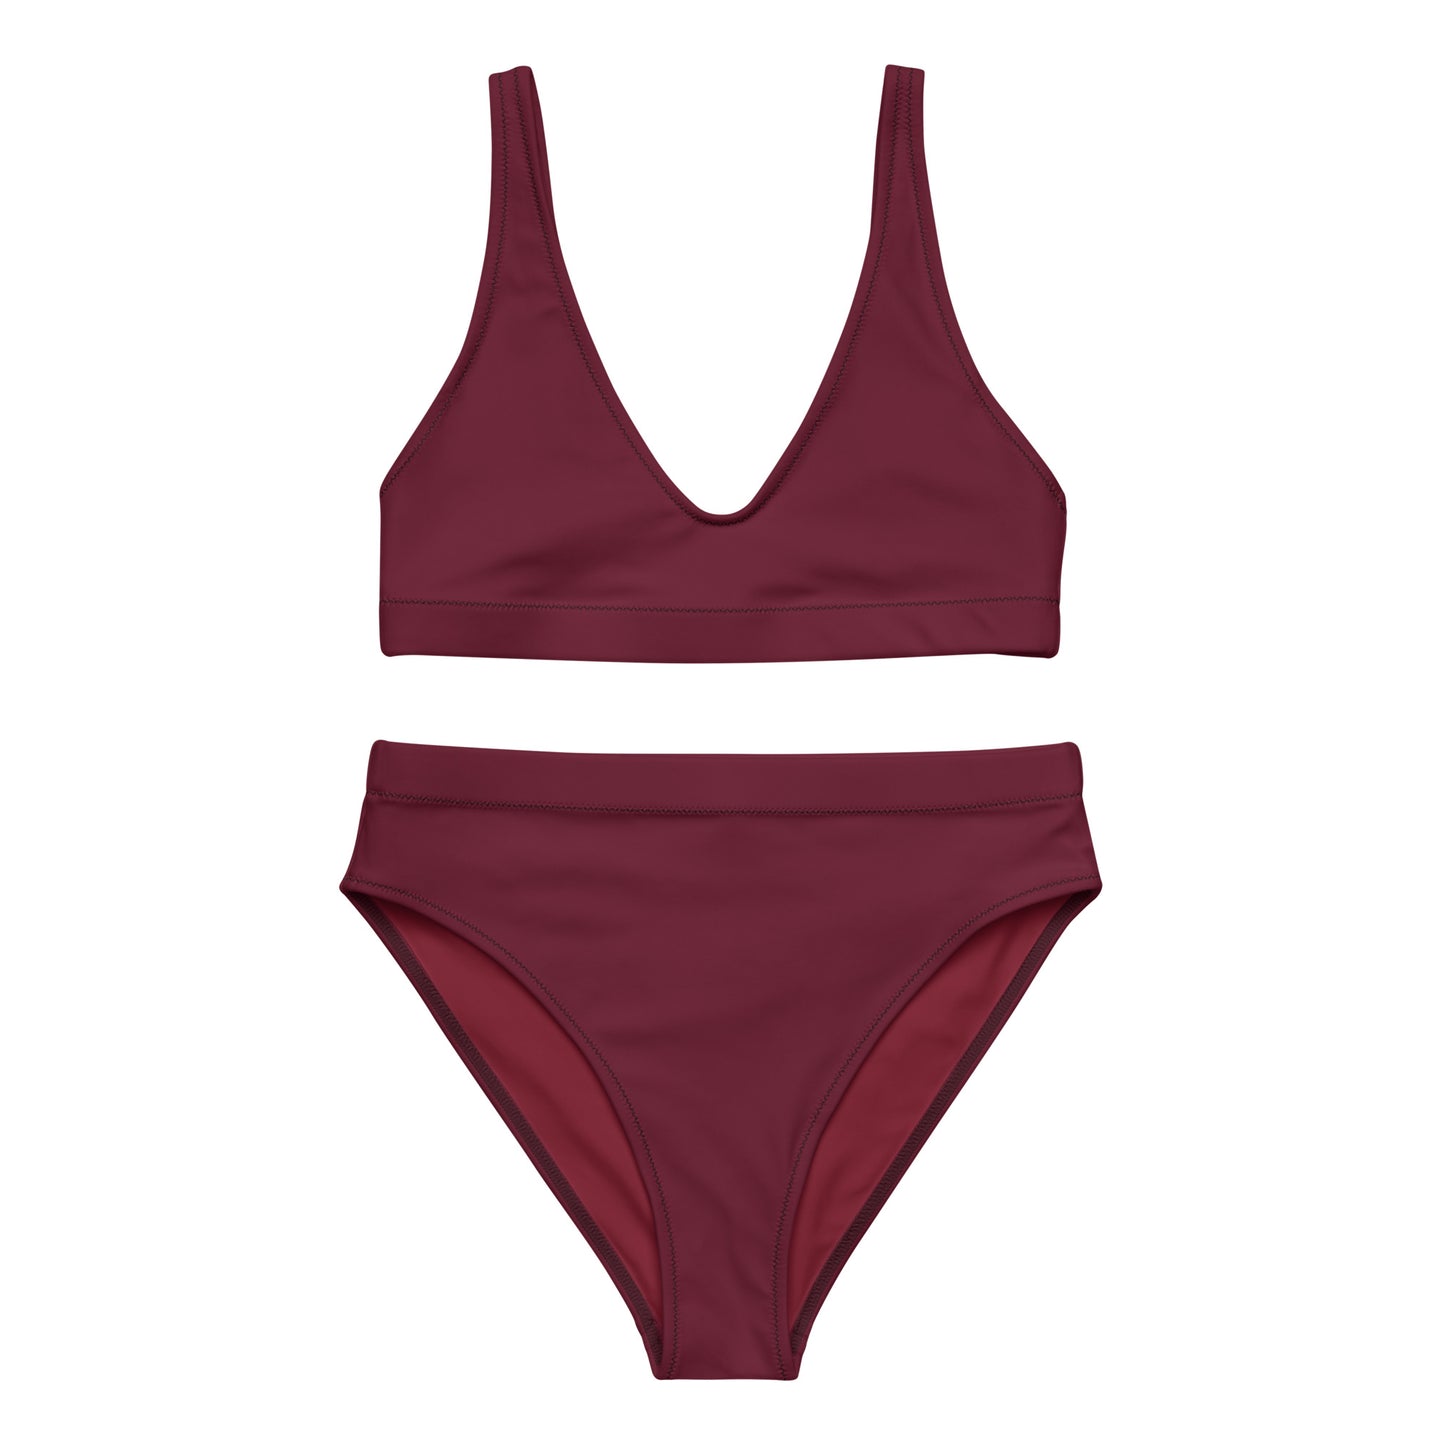 Dark claret ruby red Recycled high-waisted bikini set